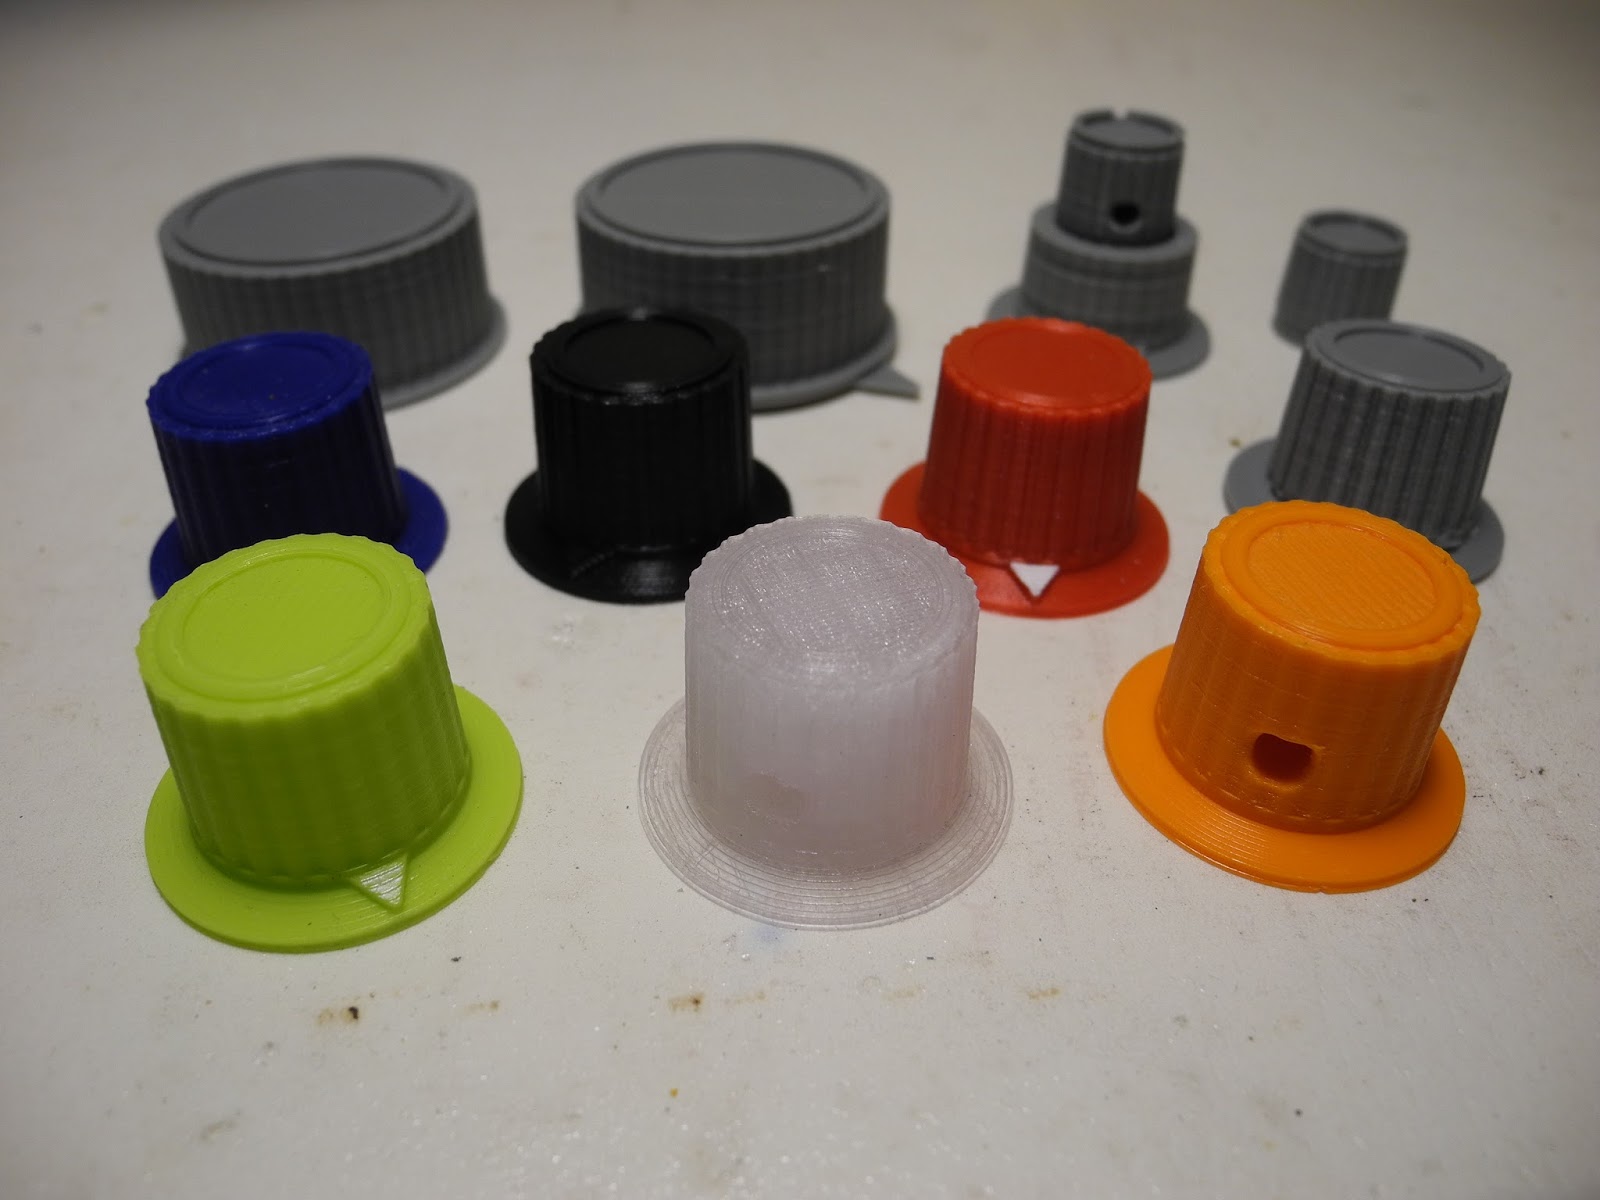 jeff-tranter-s-blog-3d-printing-heathkit-knobs